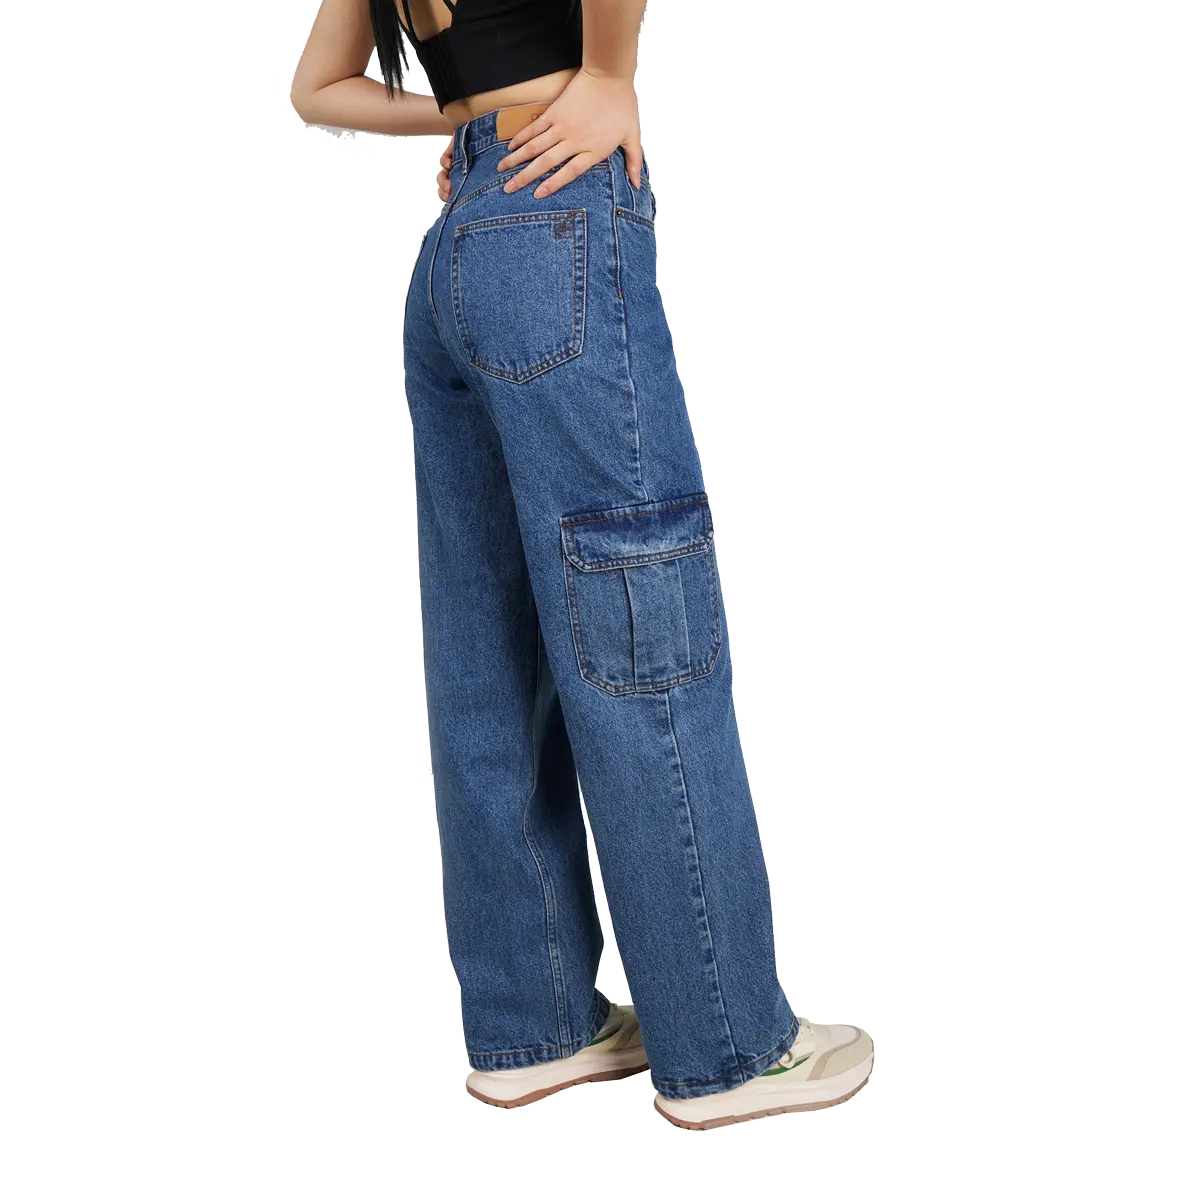 Vrouwen Jeans Broek Boyfriend Denim Jean Cargo Pocket Broek Beroemde Jeans Merk Custom Broek Street Wear Fabricage